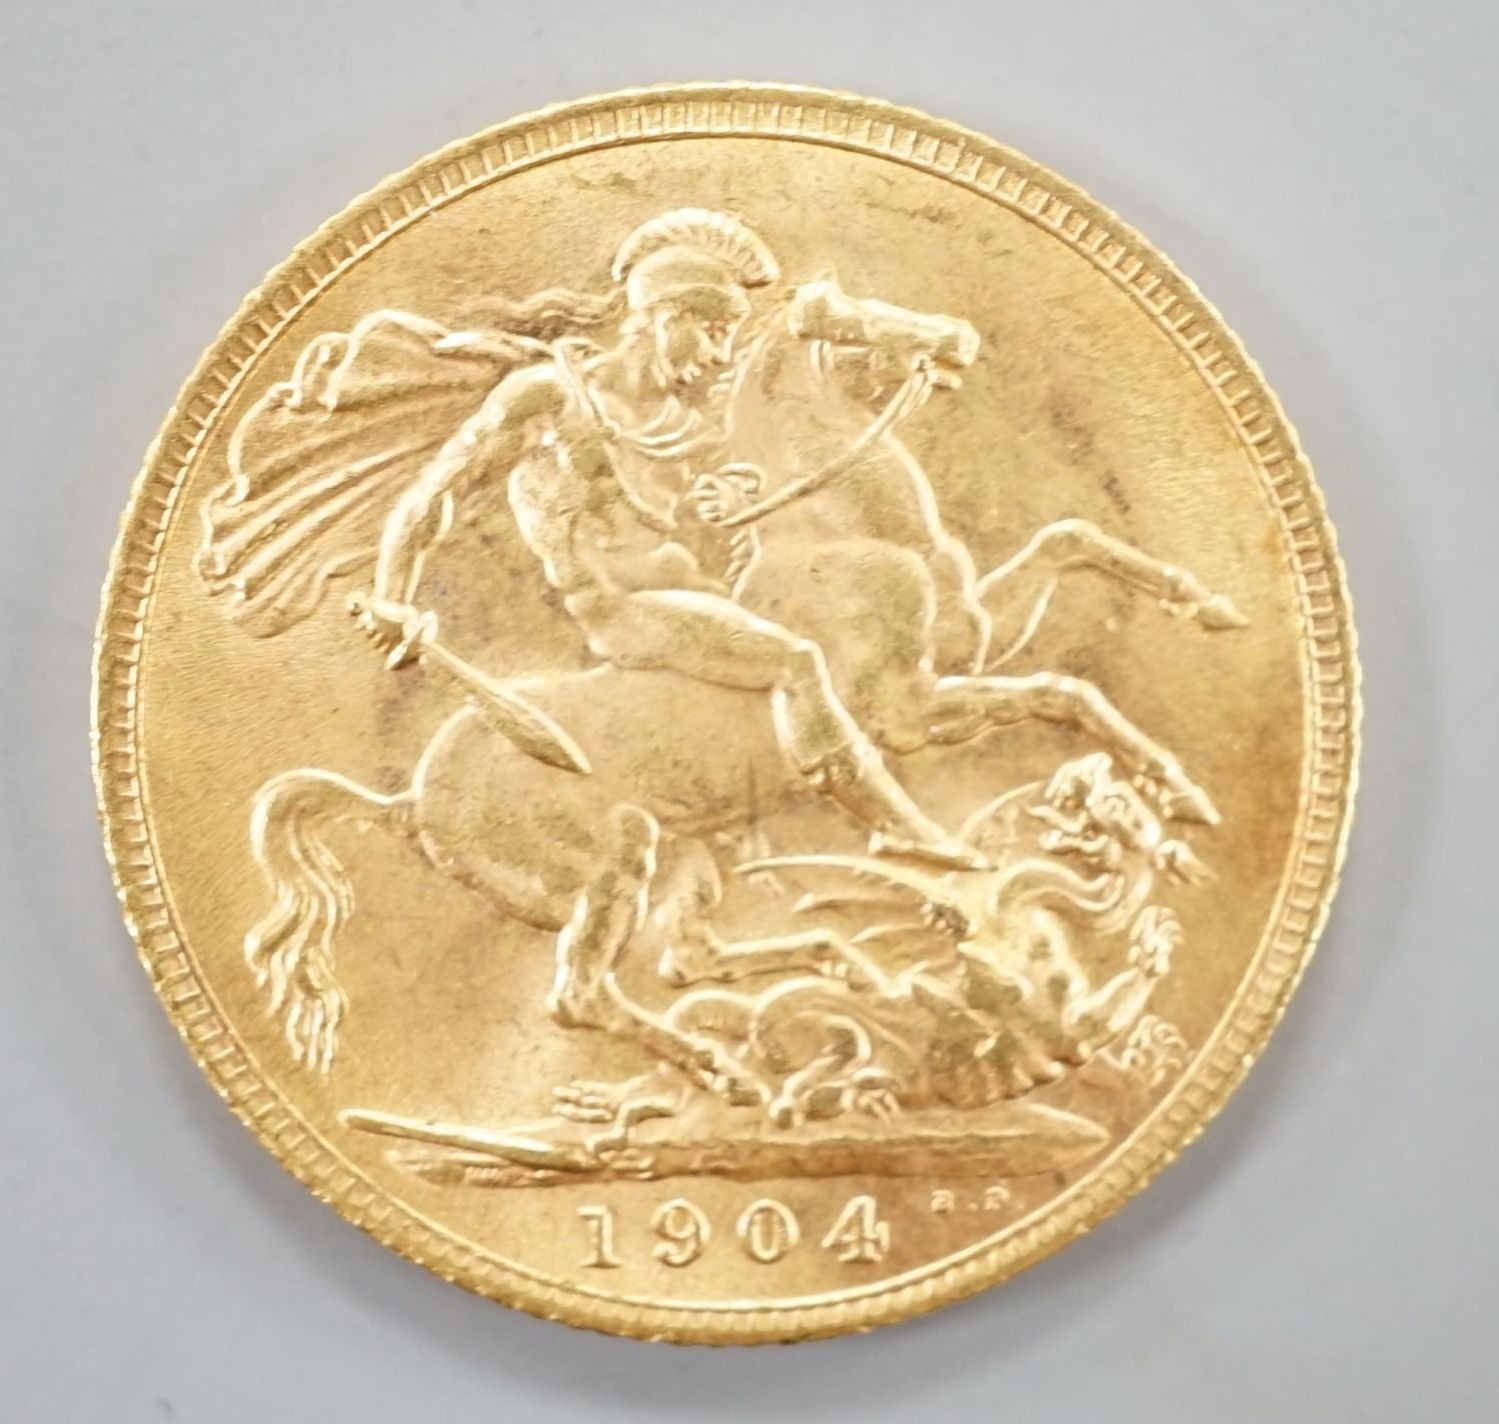 An Edward VII 1904 gold sovereign.